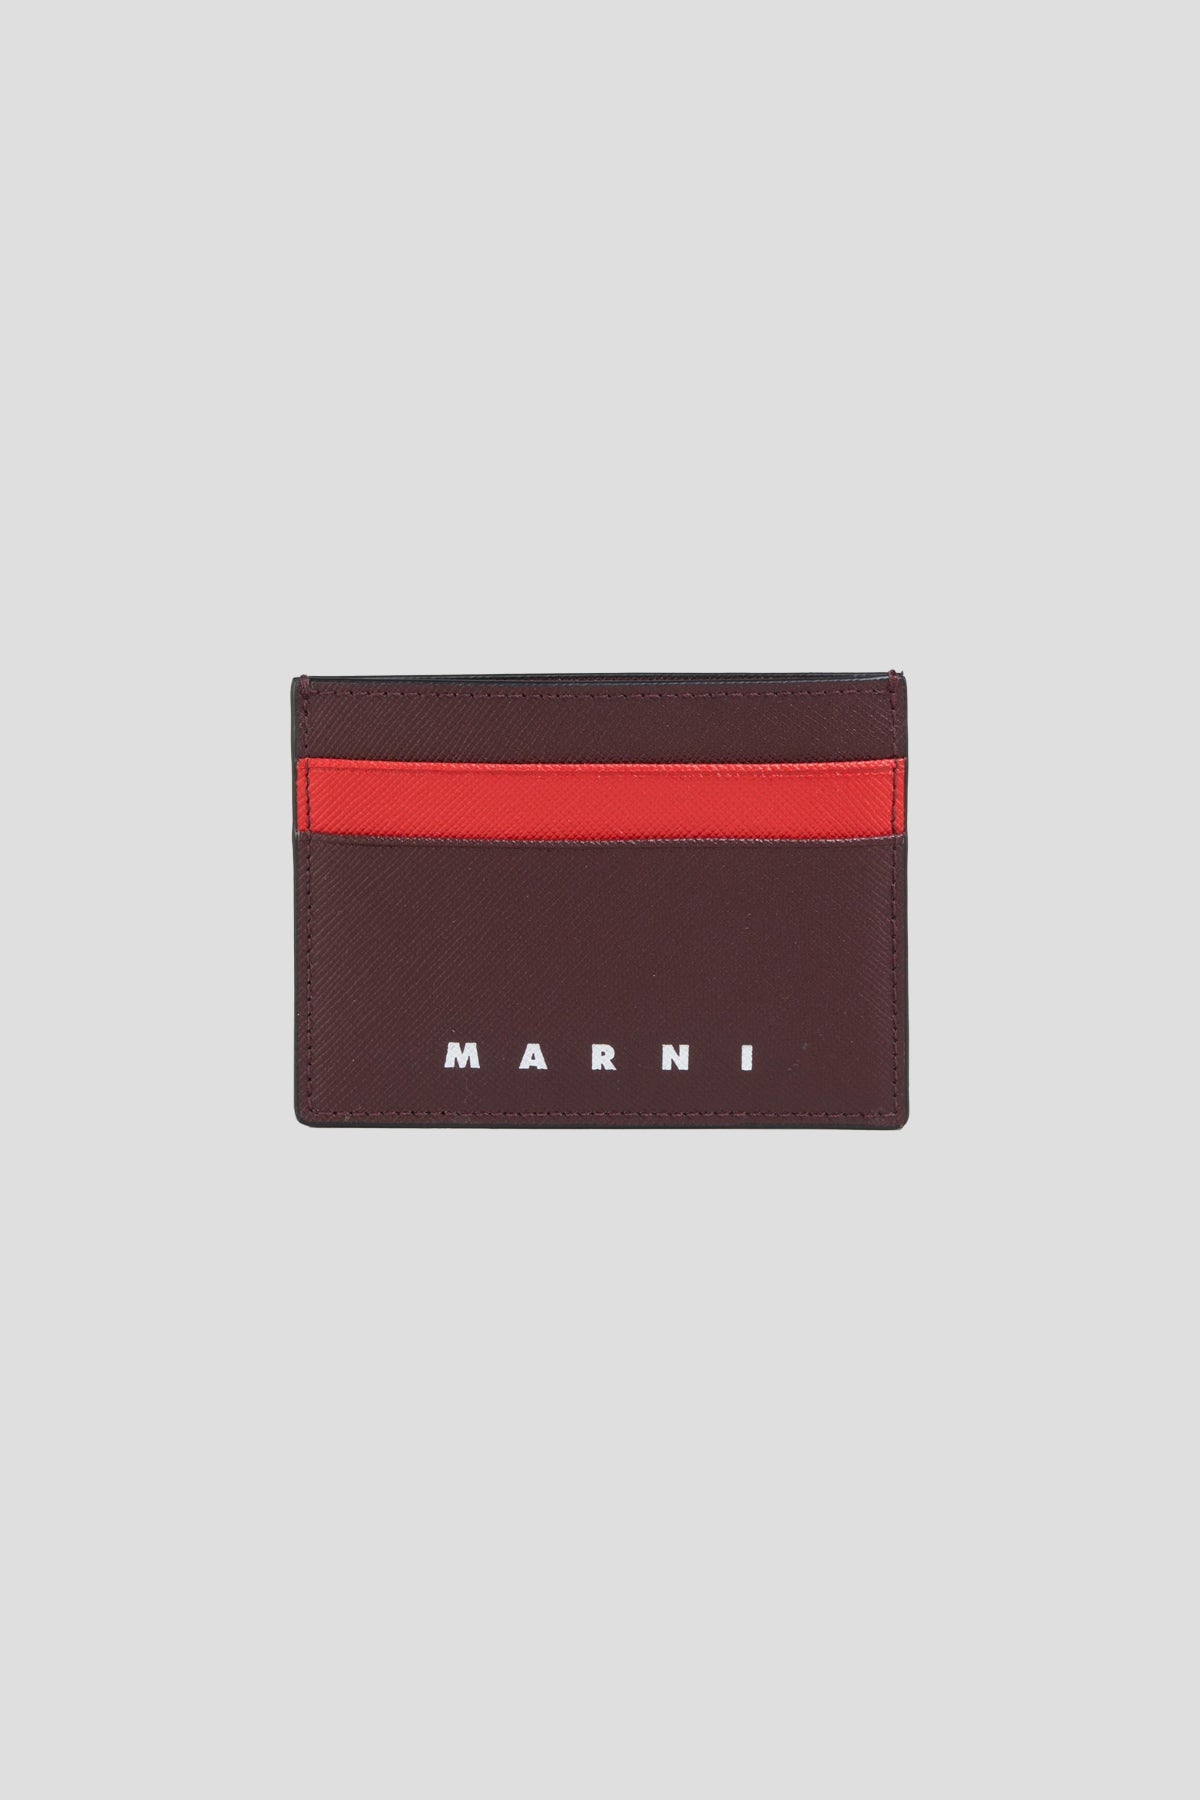 Marni Saffiano Leather Credit Card Holder